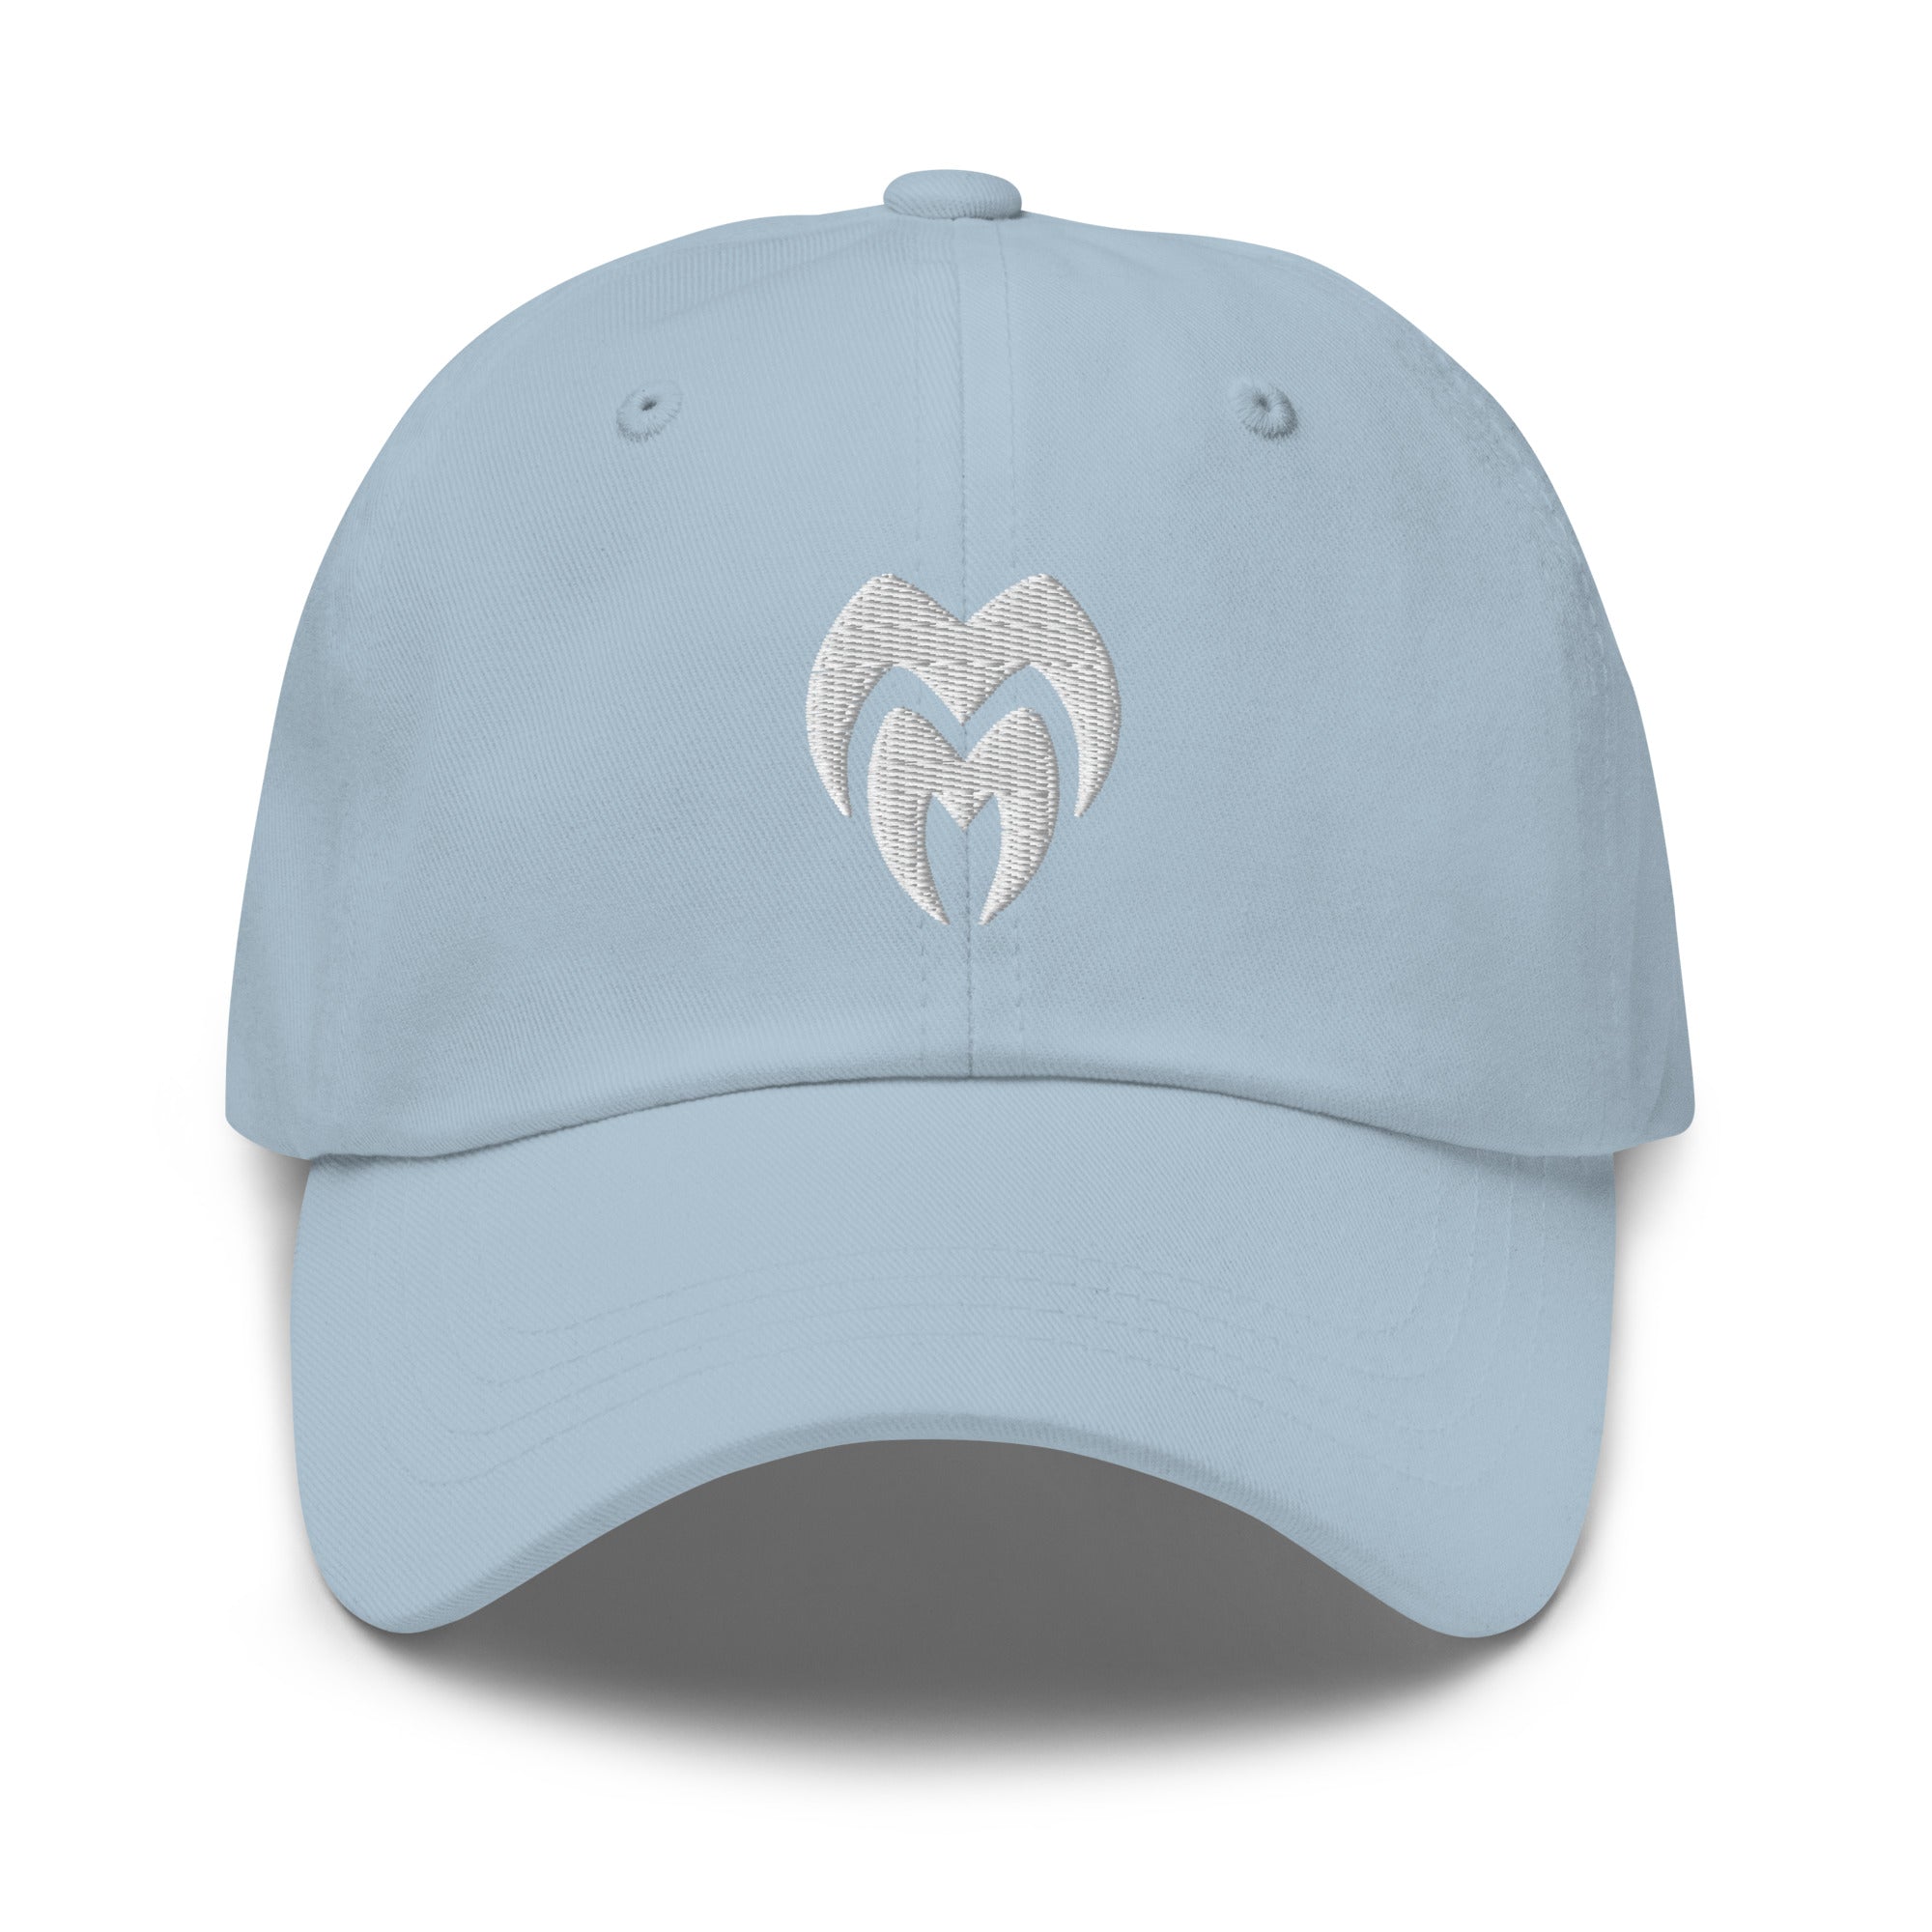 Mainland Maui "MM Logo" Chino Dad Hat